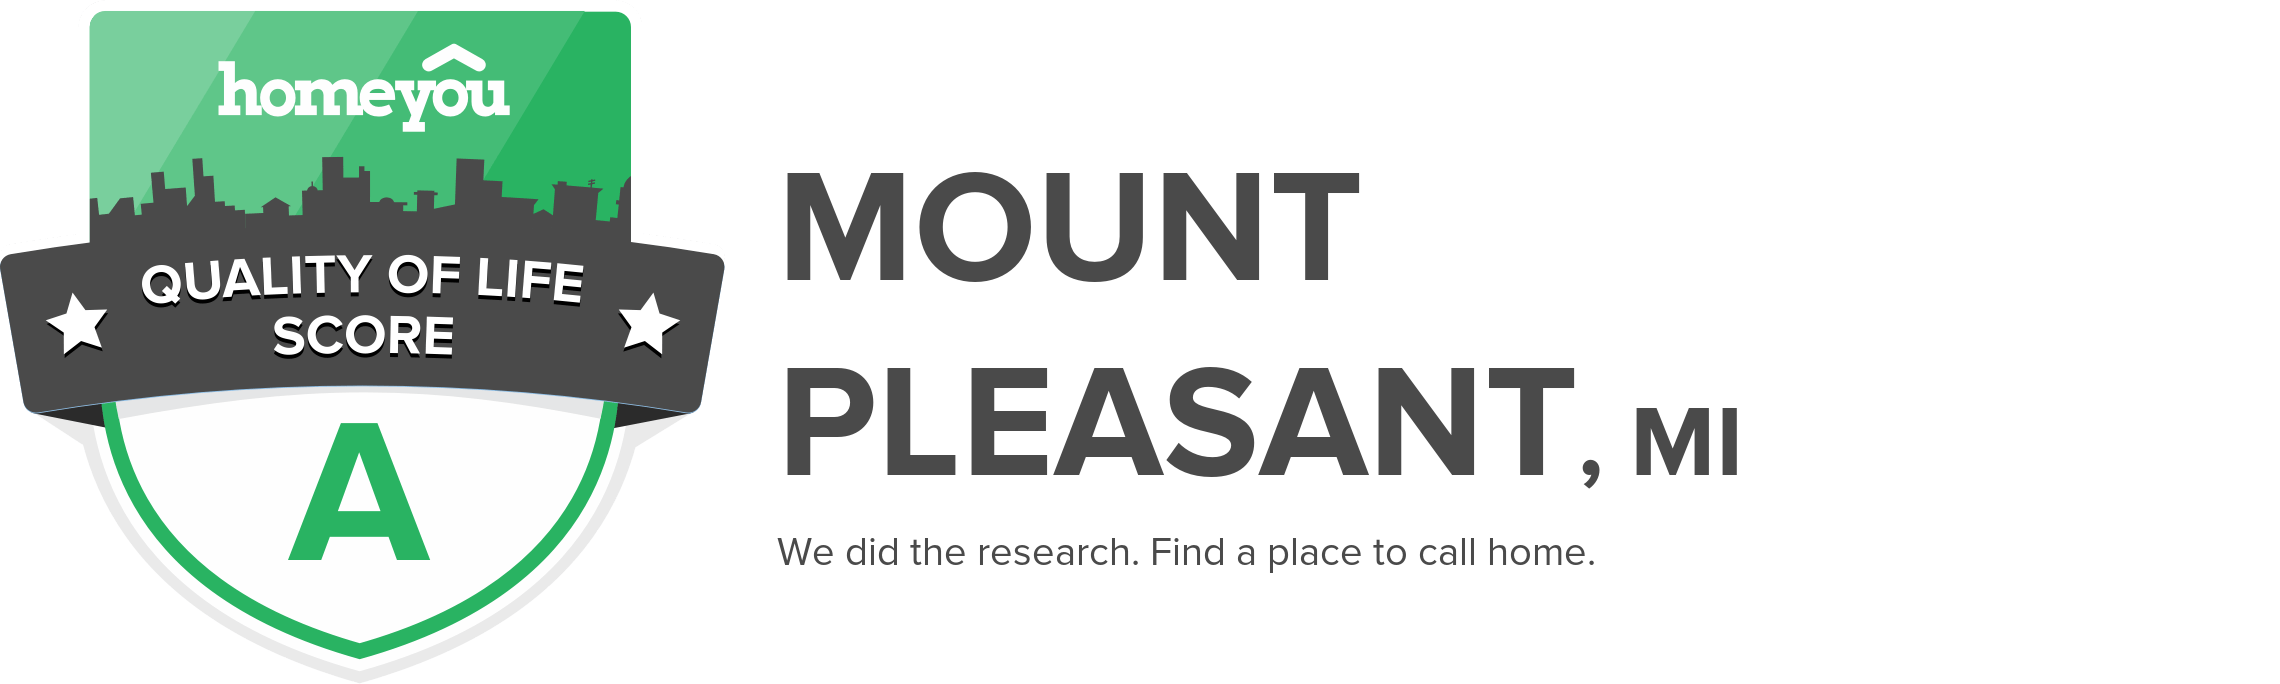 Mount Pleasant, MI